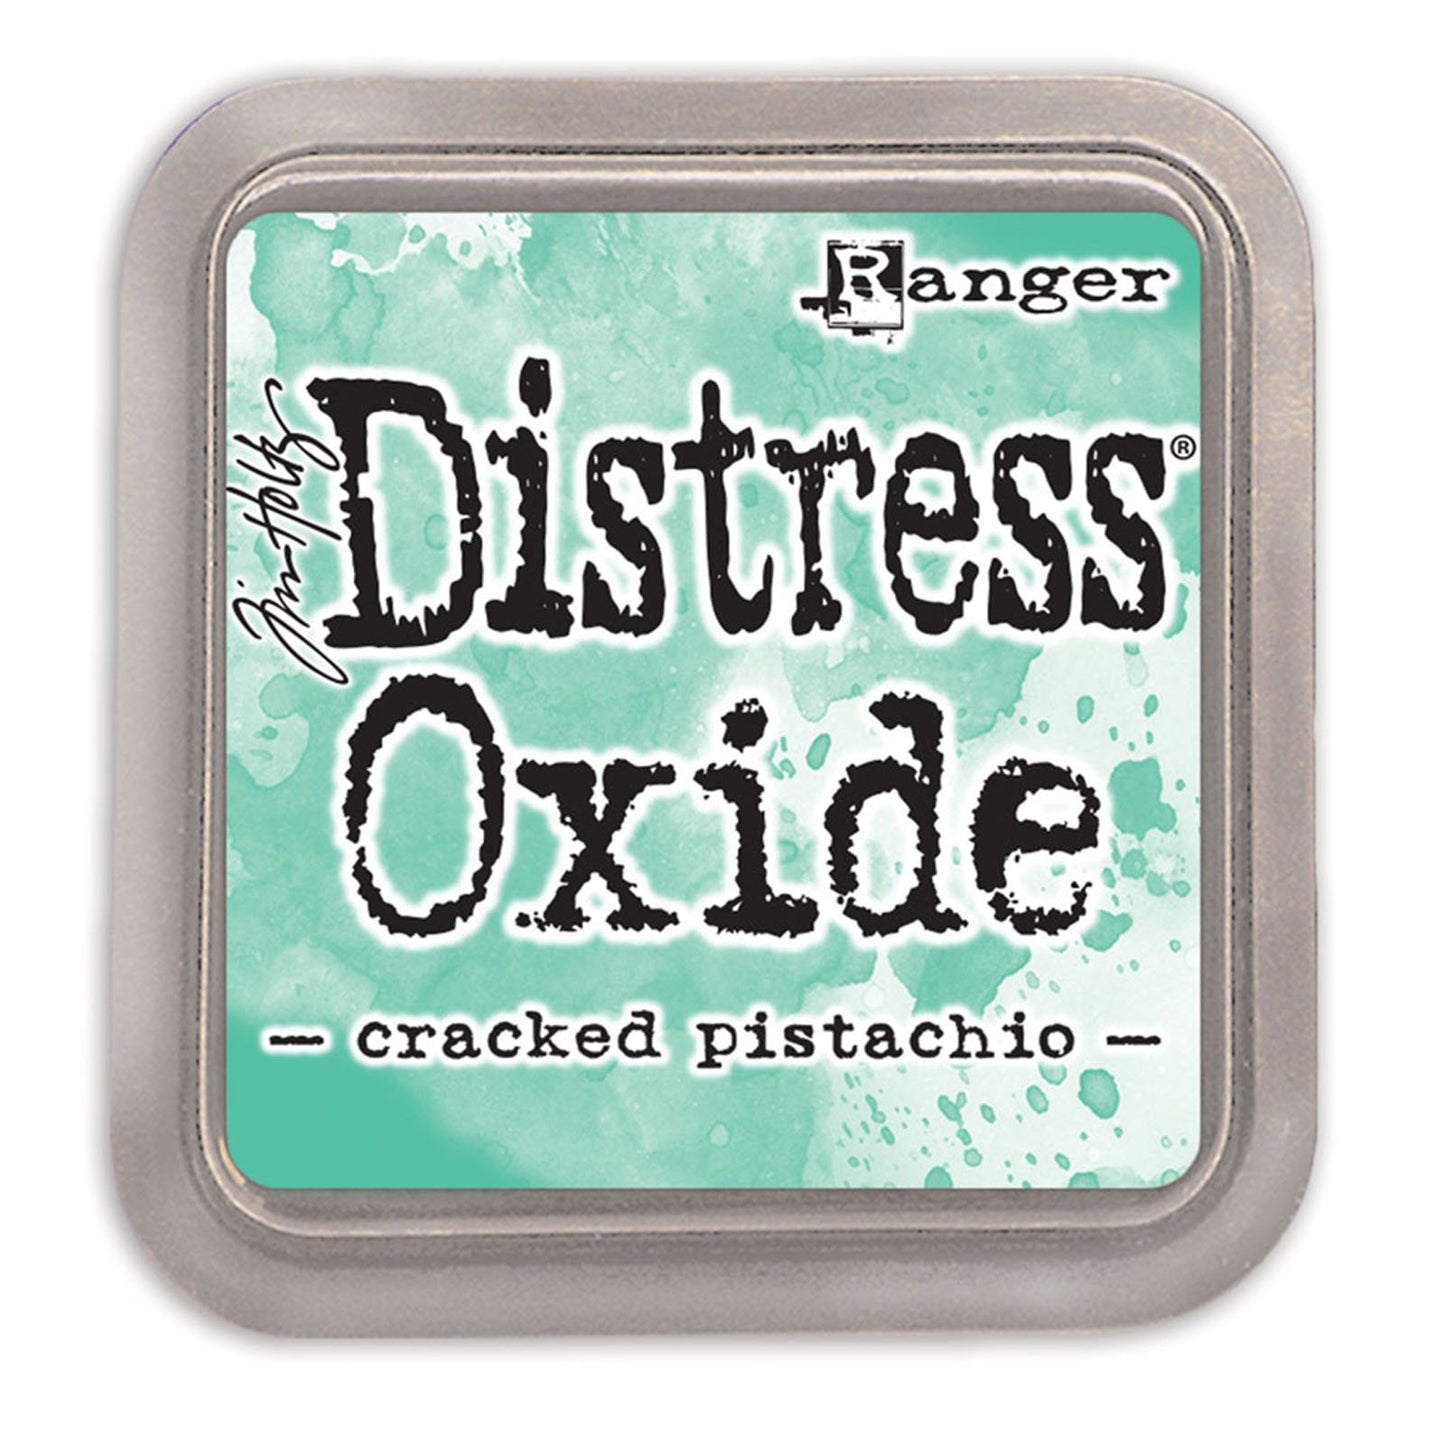 Tinta Distress Oxide Cracked pistachio